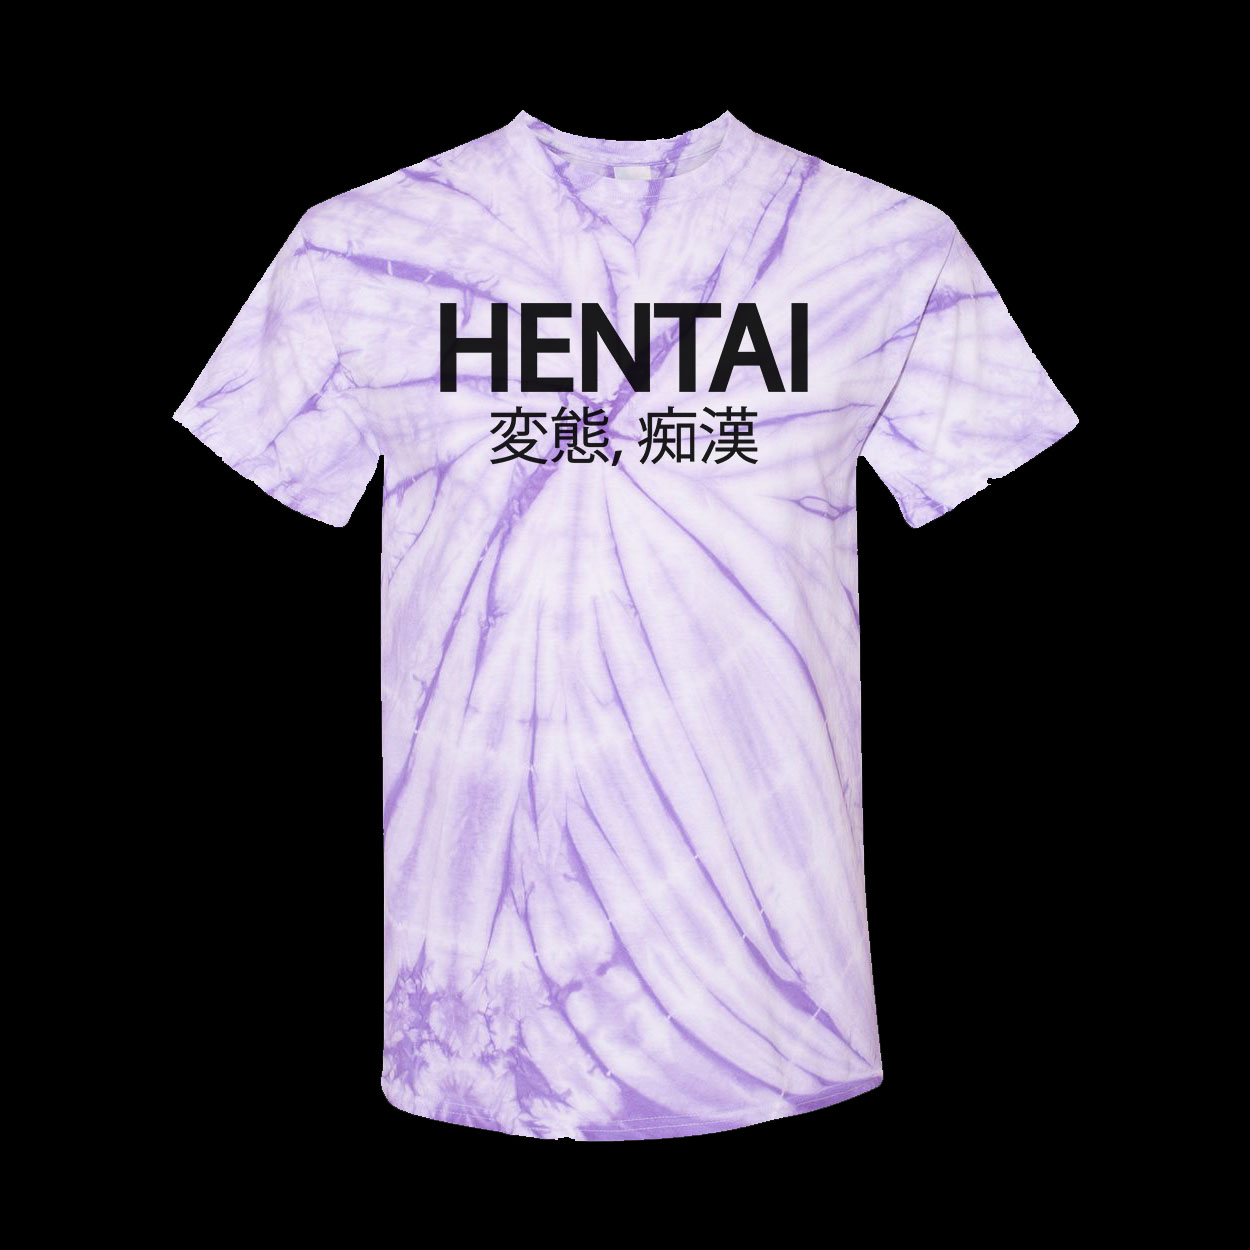 Accidie Hentai Lavender Tie Dye T-shirt